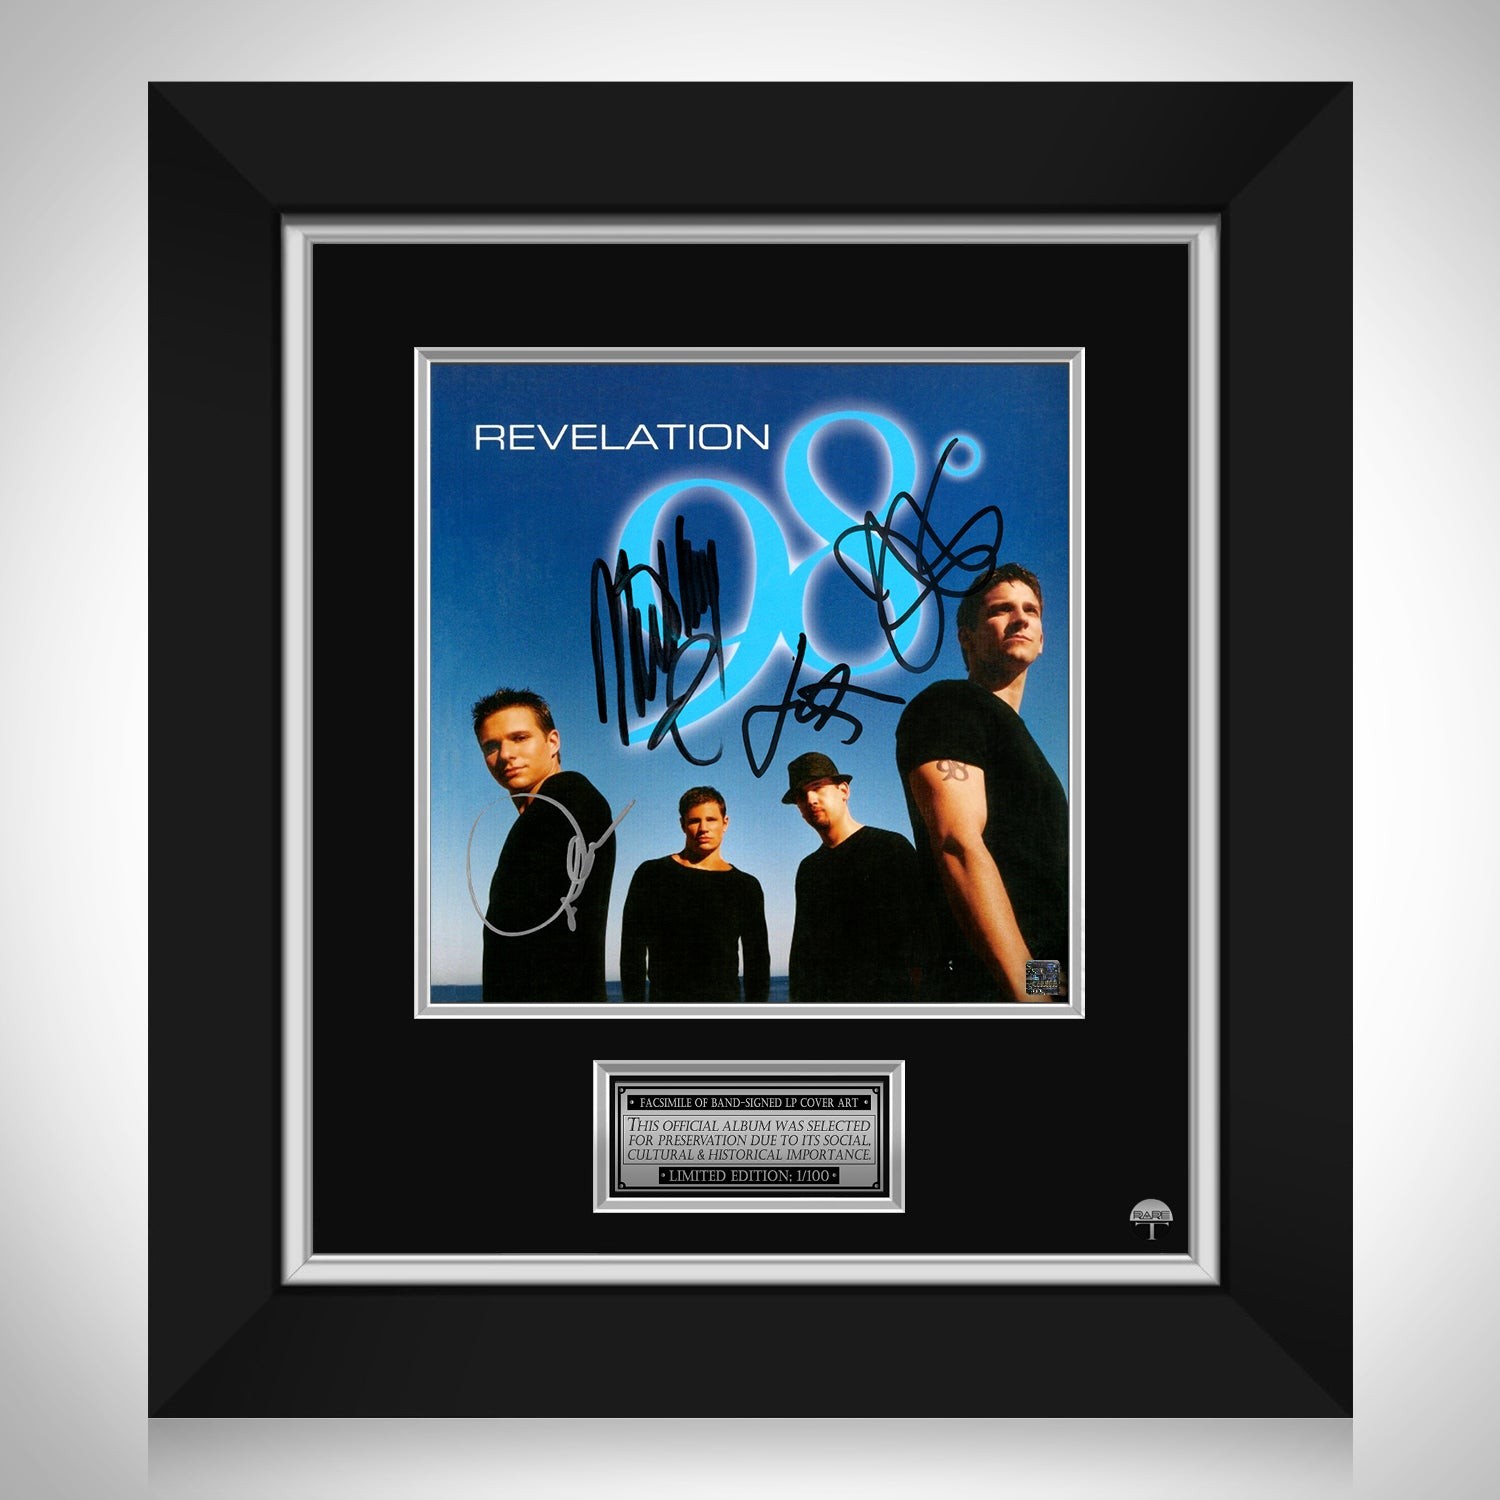 98 Degrees - Revelation LP Cover Limited Signature Edition Custom Frame